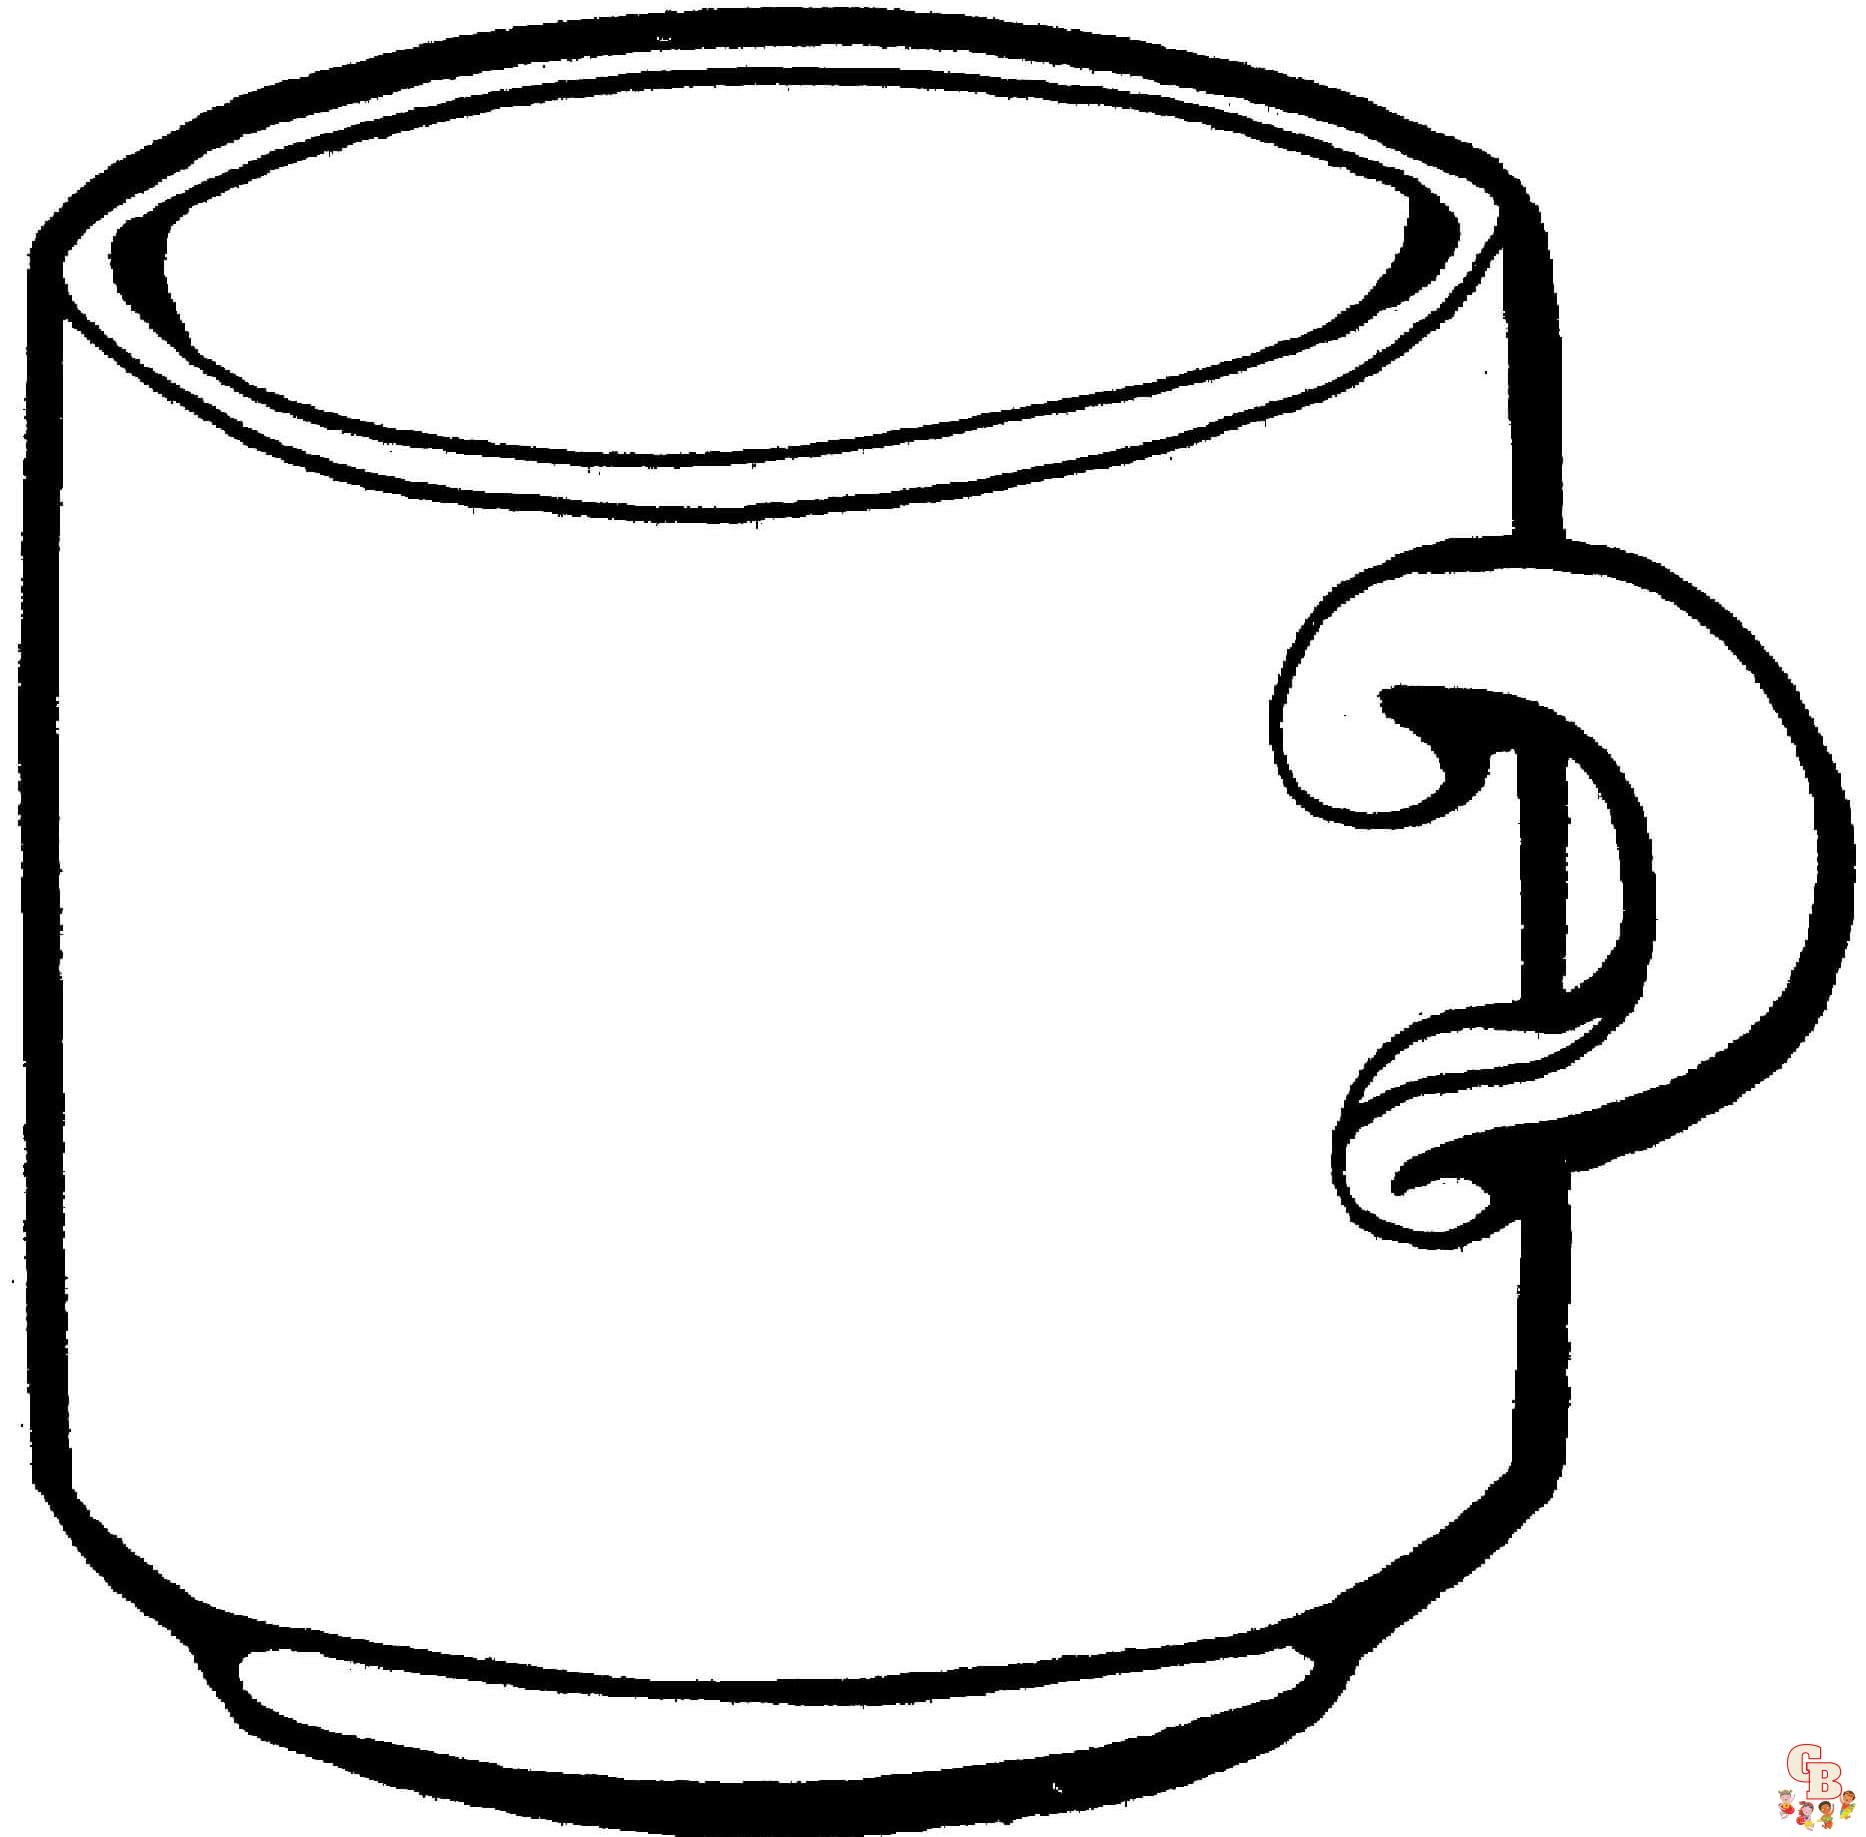 Dibujo de Taza para té para colorear  Dibujos para colorear imprimir gratis